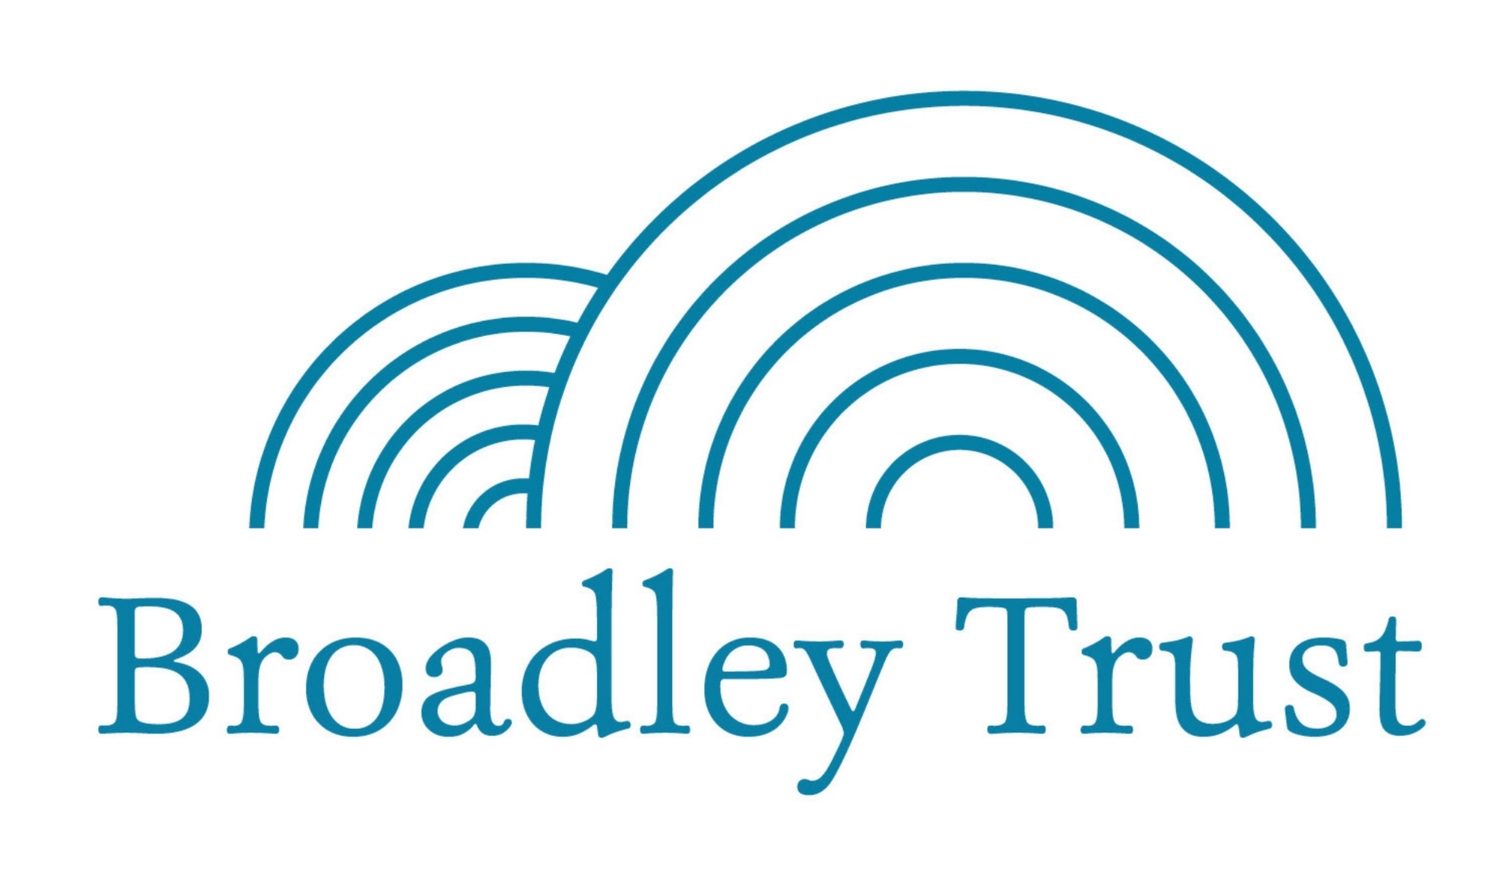 The Broadley Trust